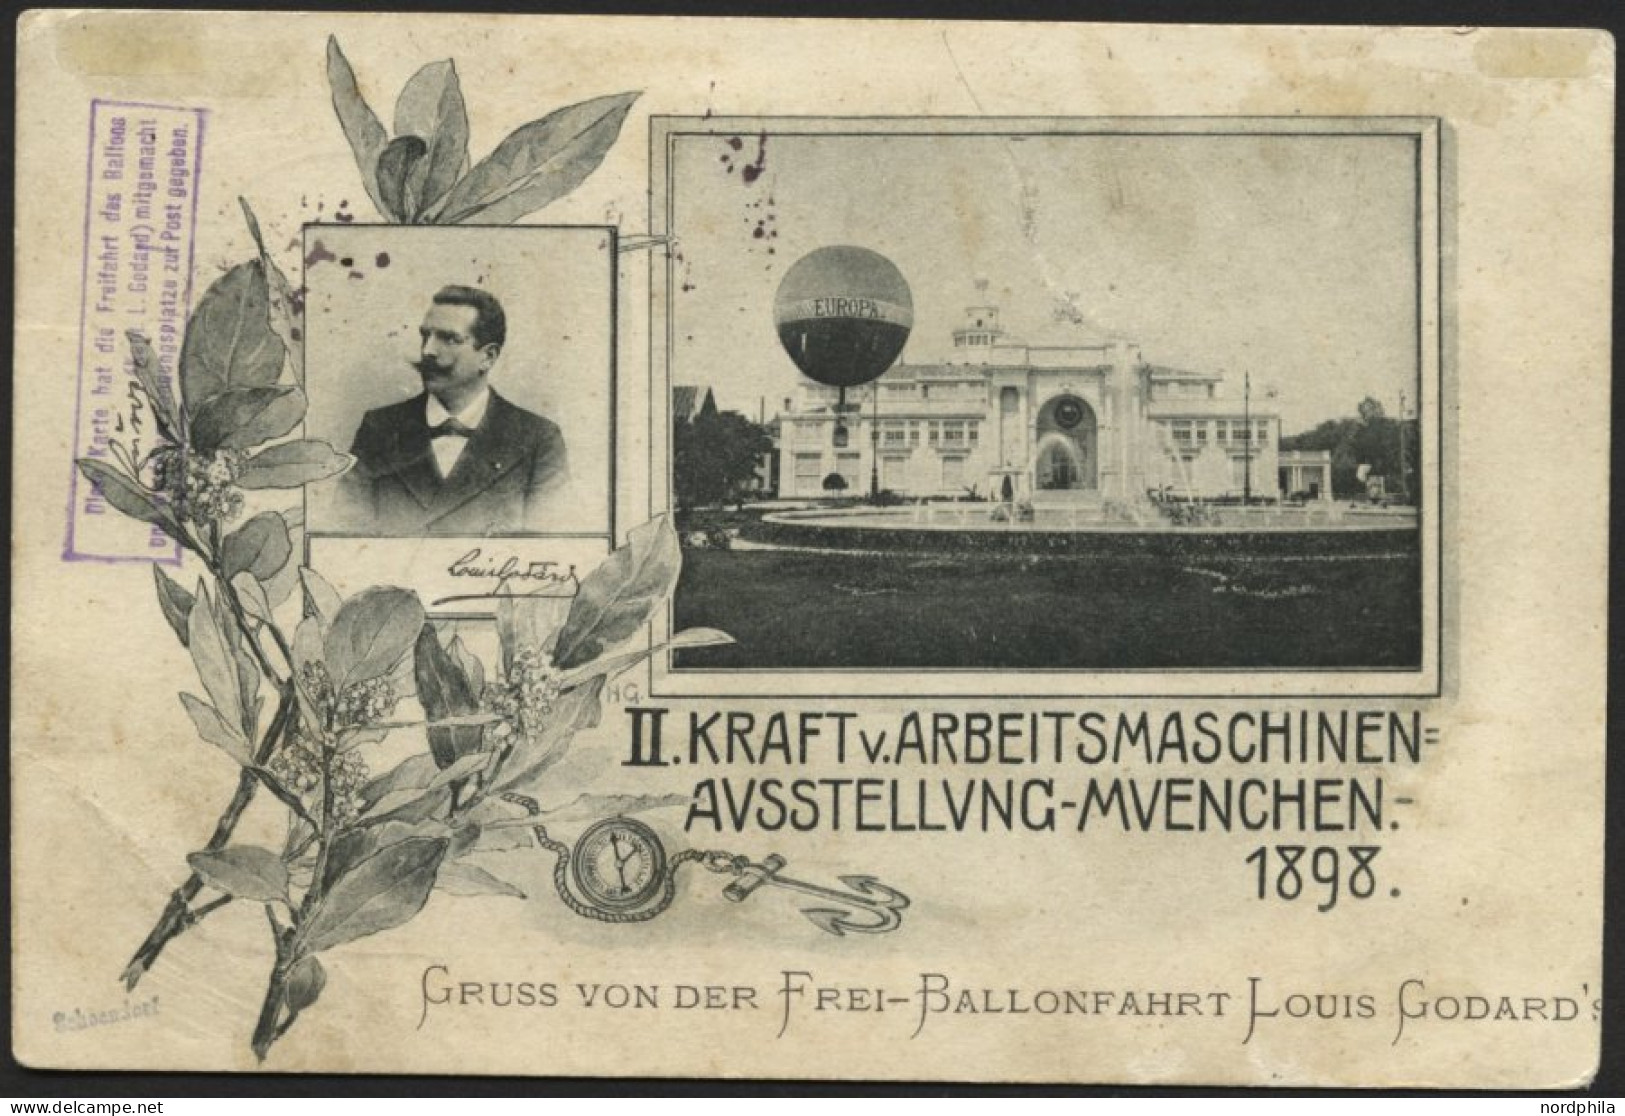 BALLON-FAHRTEN 1897-1916 15.8.1898, Freifahrt Des Ballons EUROPA Mit Kapitän Louis Godard, Aufstieg Am 1. Ausstellungsta - Montgolfières